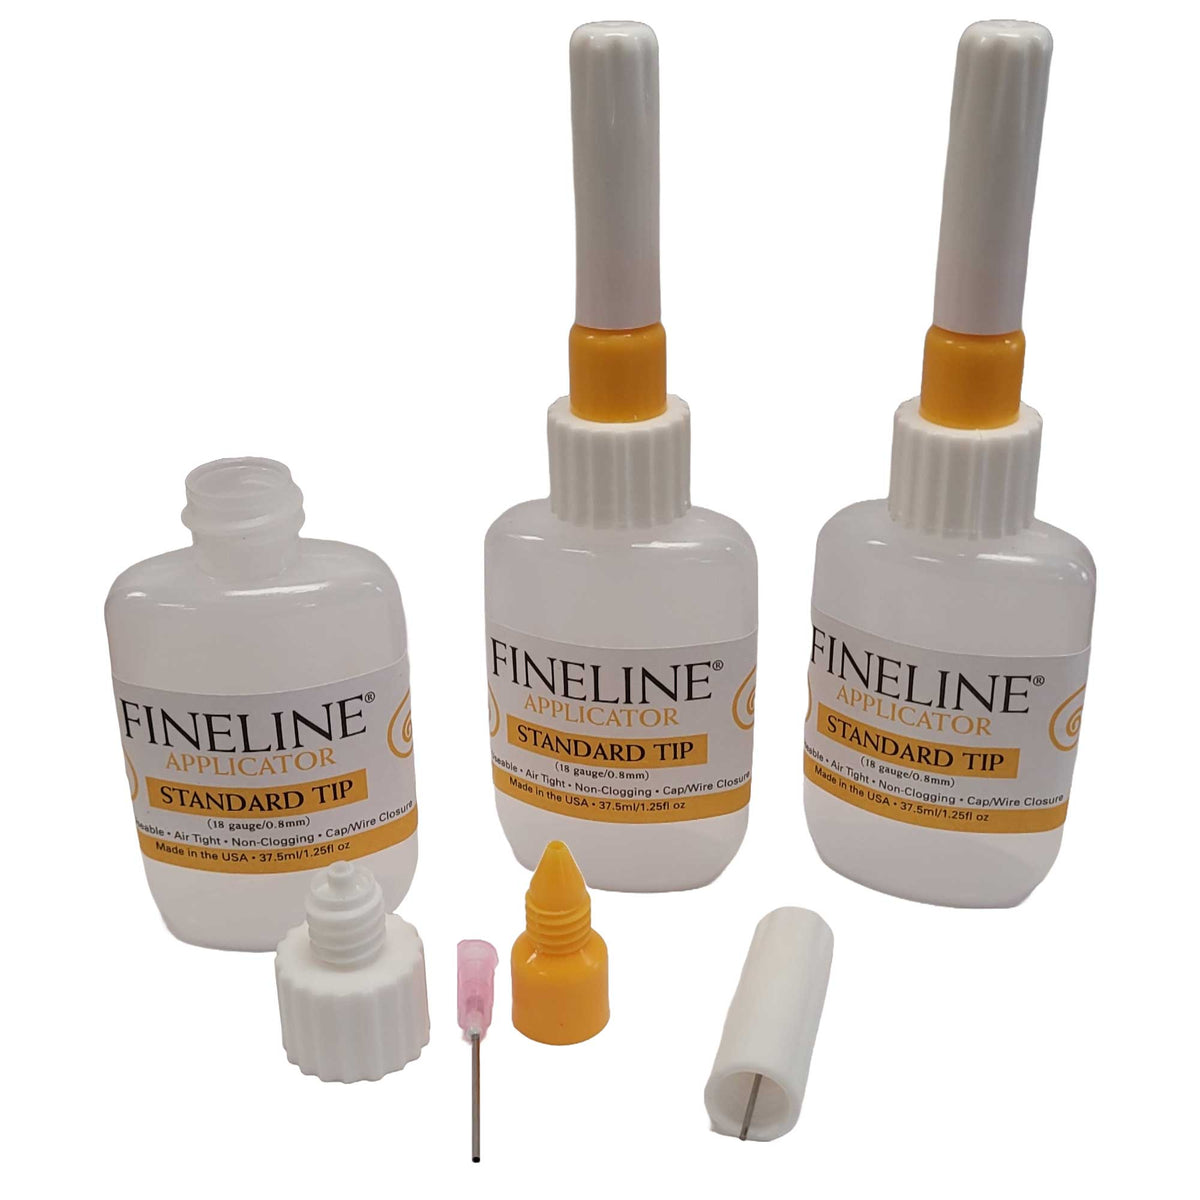 Fineline Applicator 3 Pack 18g Tip with 1oz Tubes